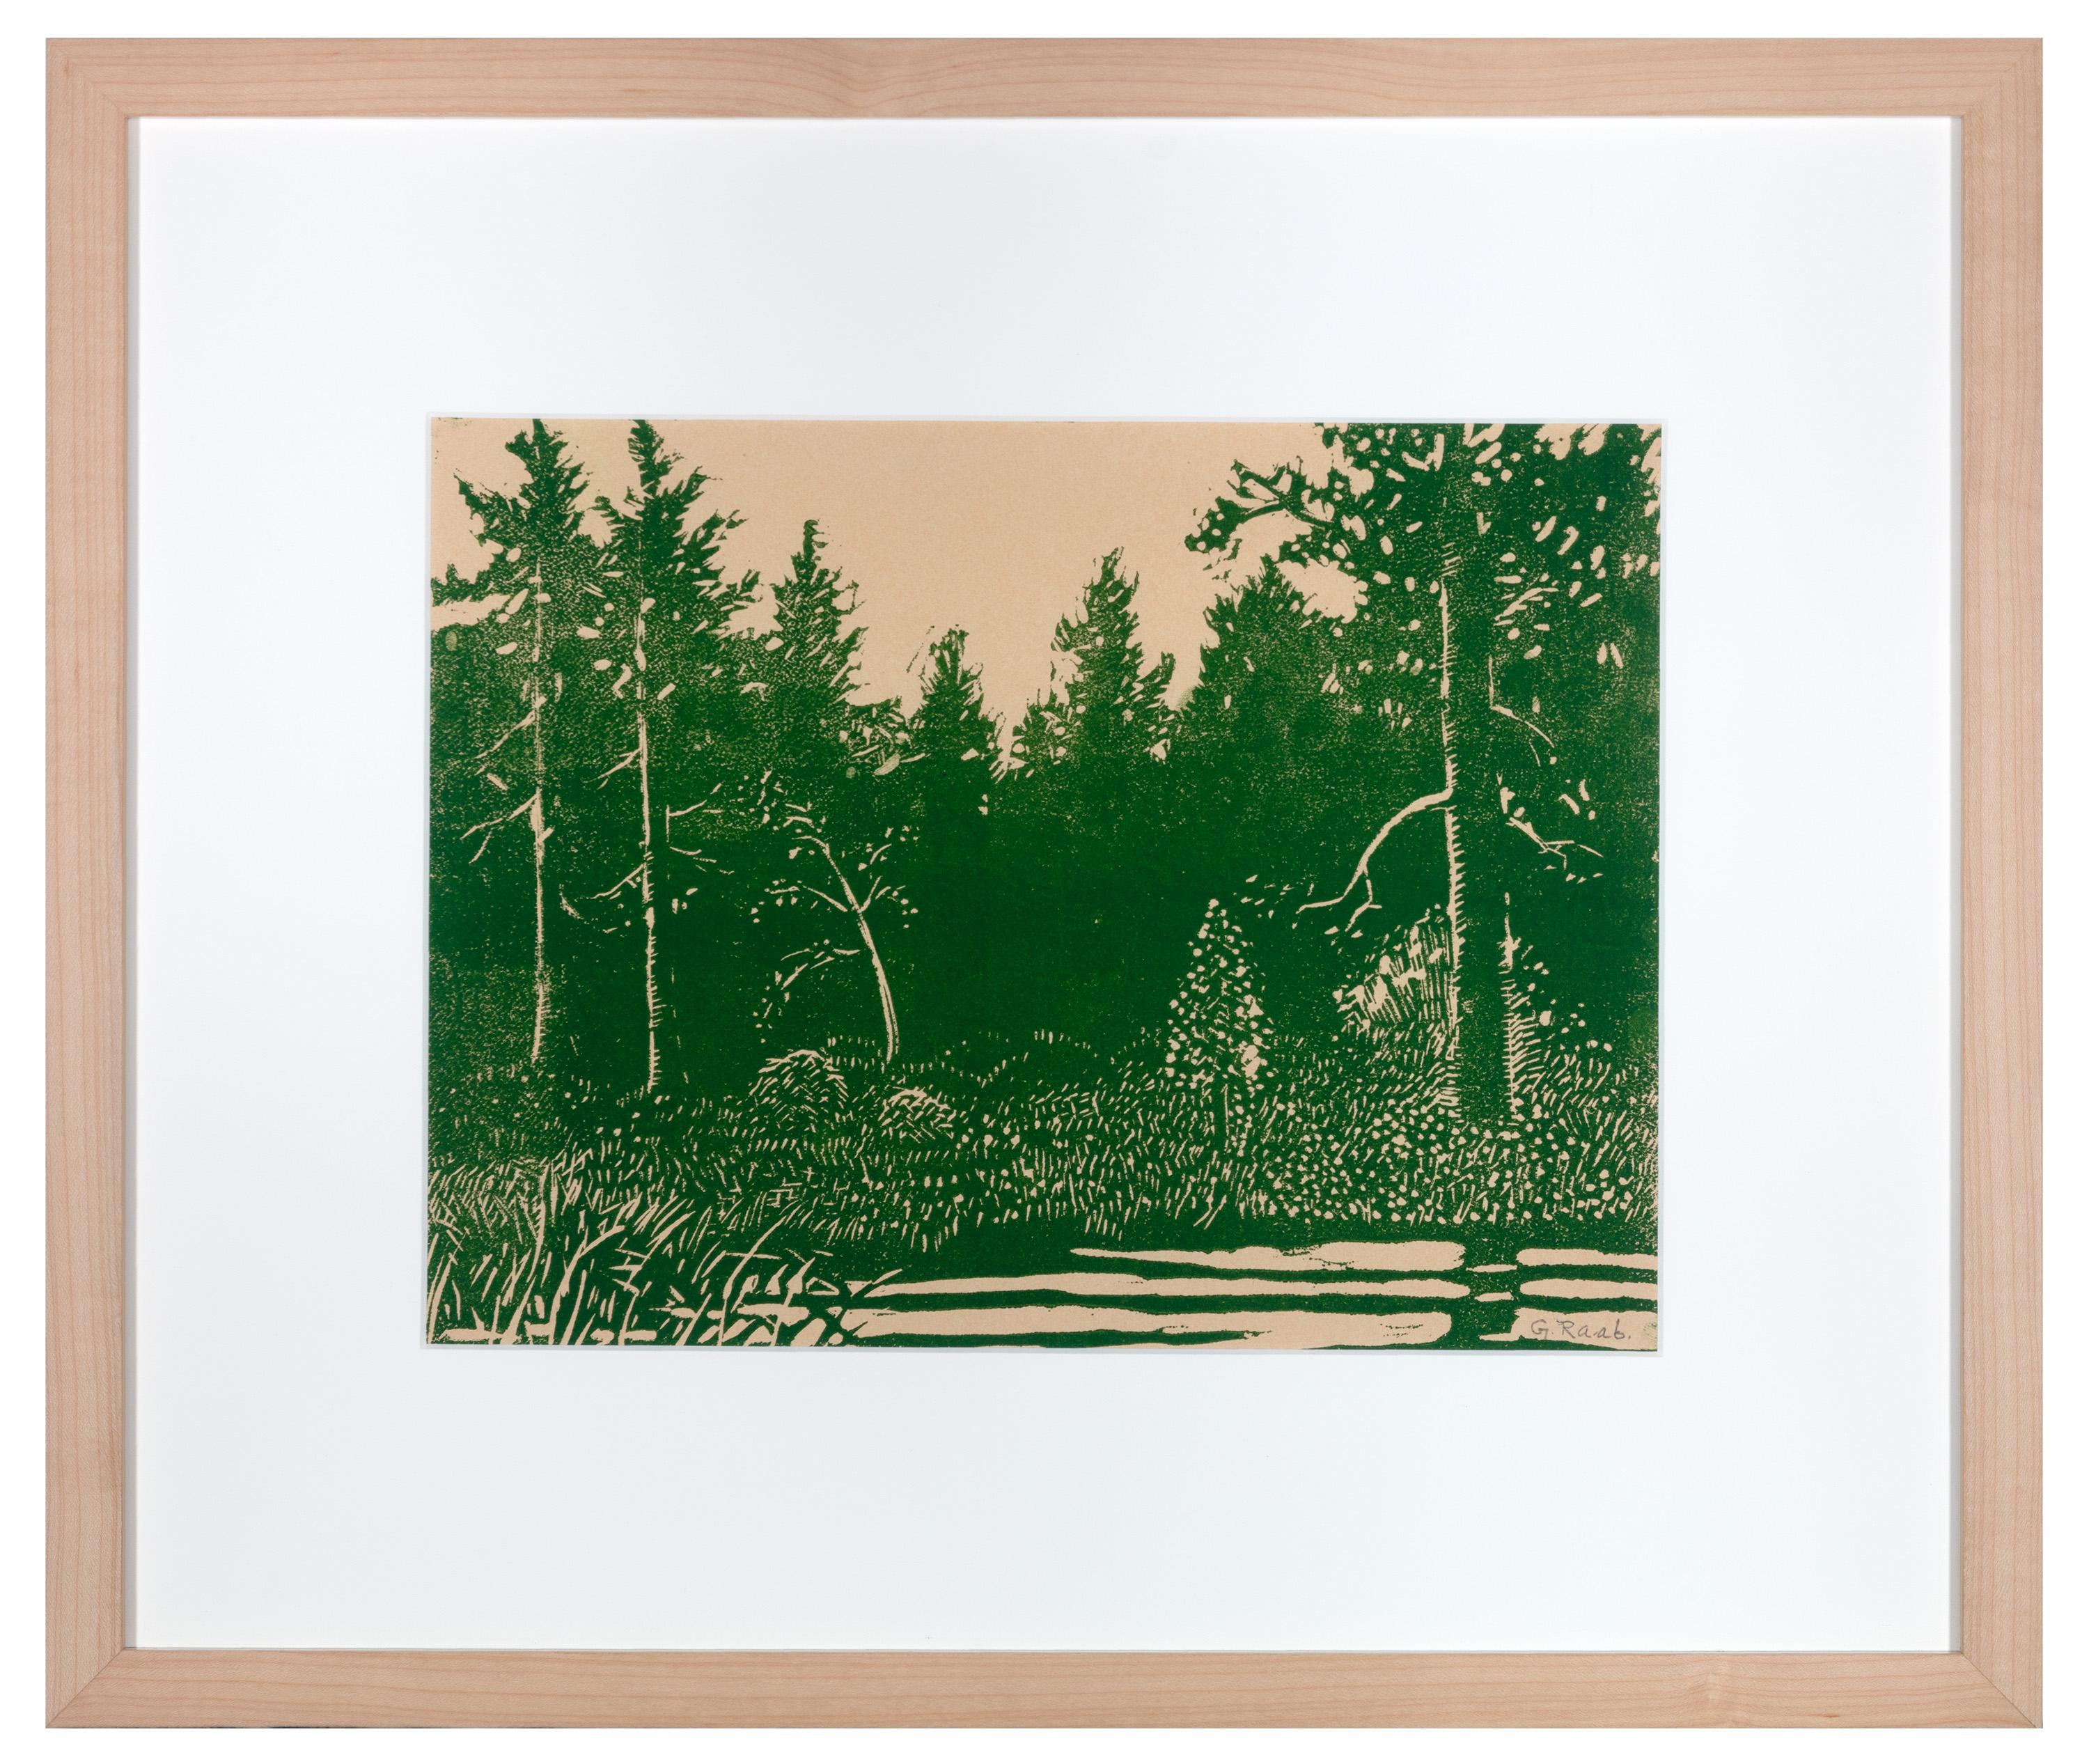 George Raab Landscape Print - "Solitude, " Linoleum Block Print, Signed 